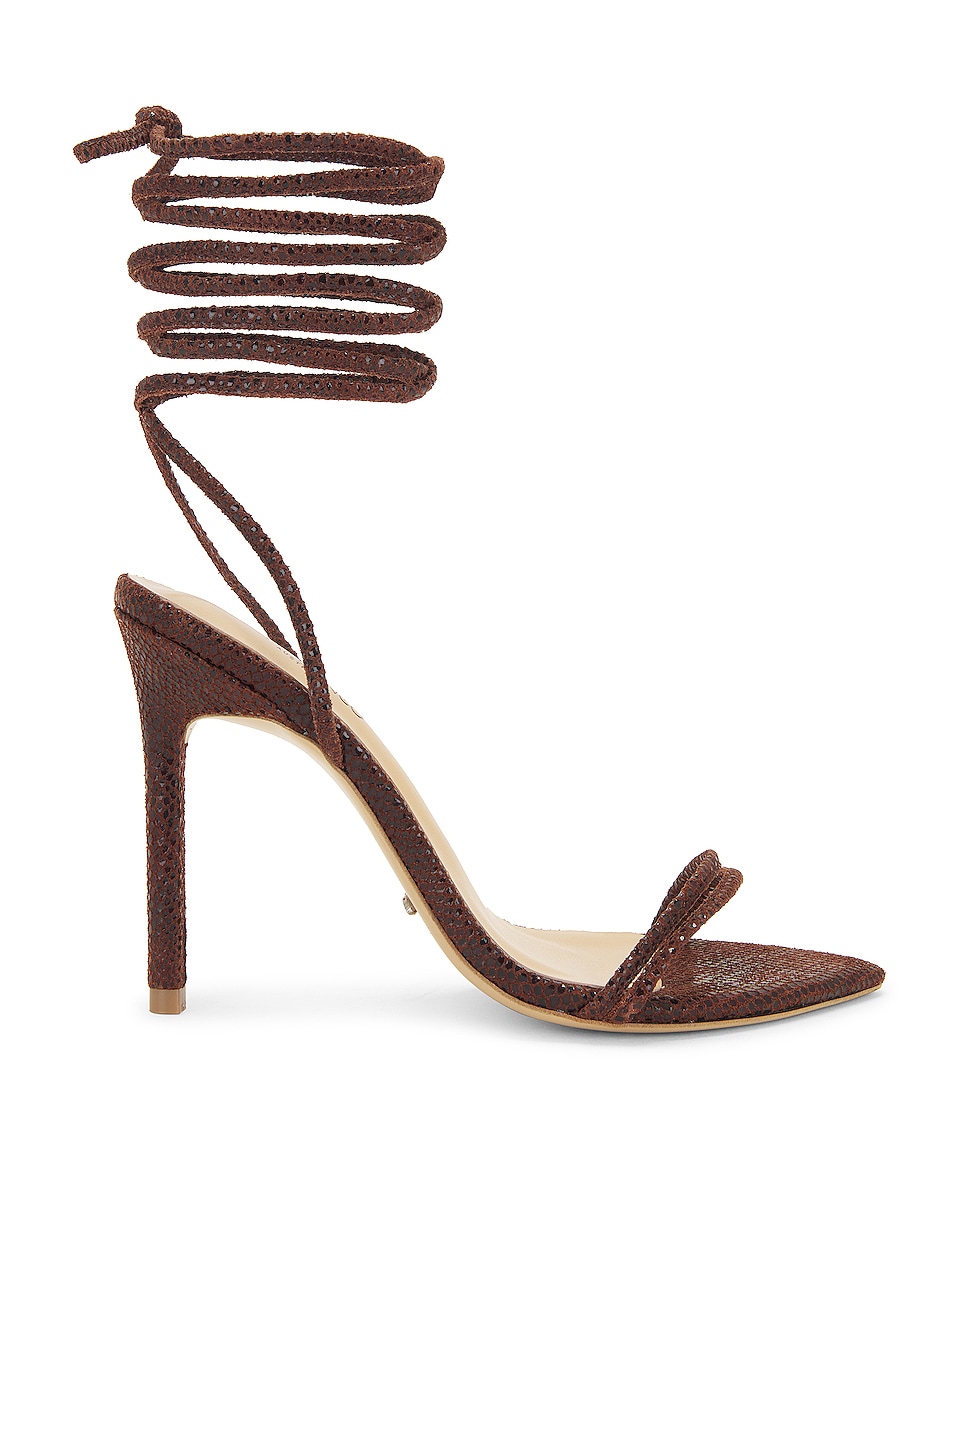 Lee Stiletto in Chocolate. Revolve Women Shoes High Heels Heels Heeled Sandals 